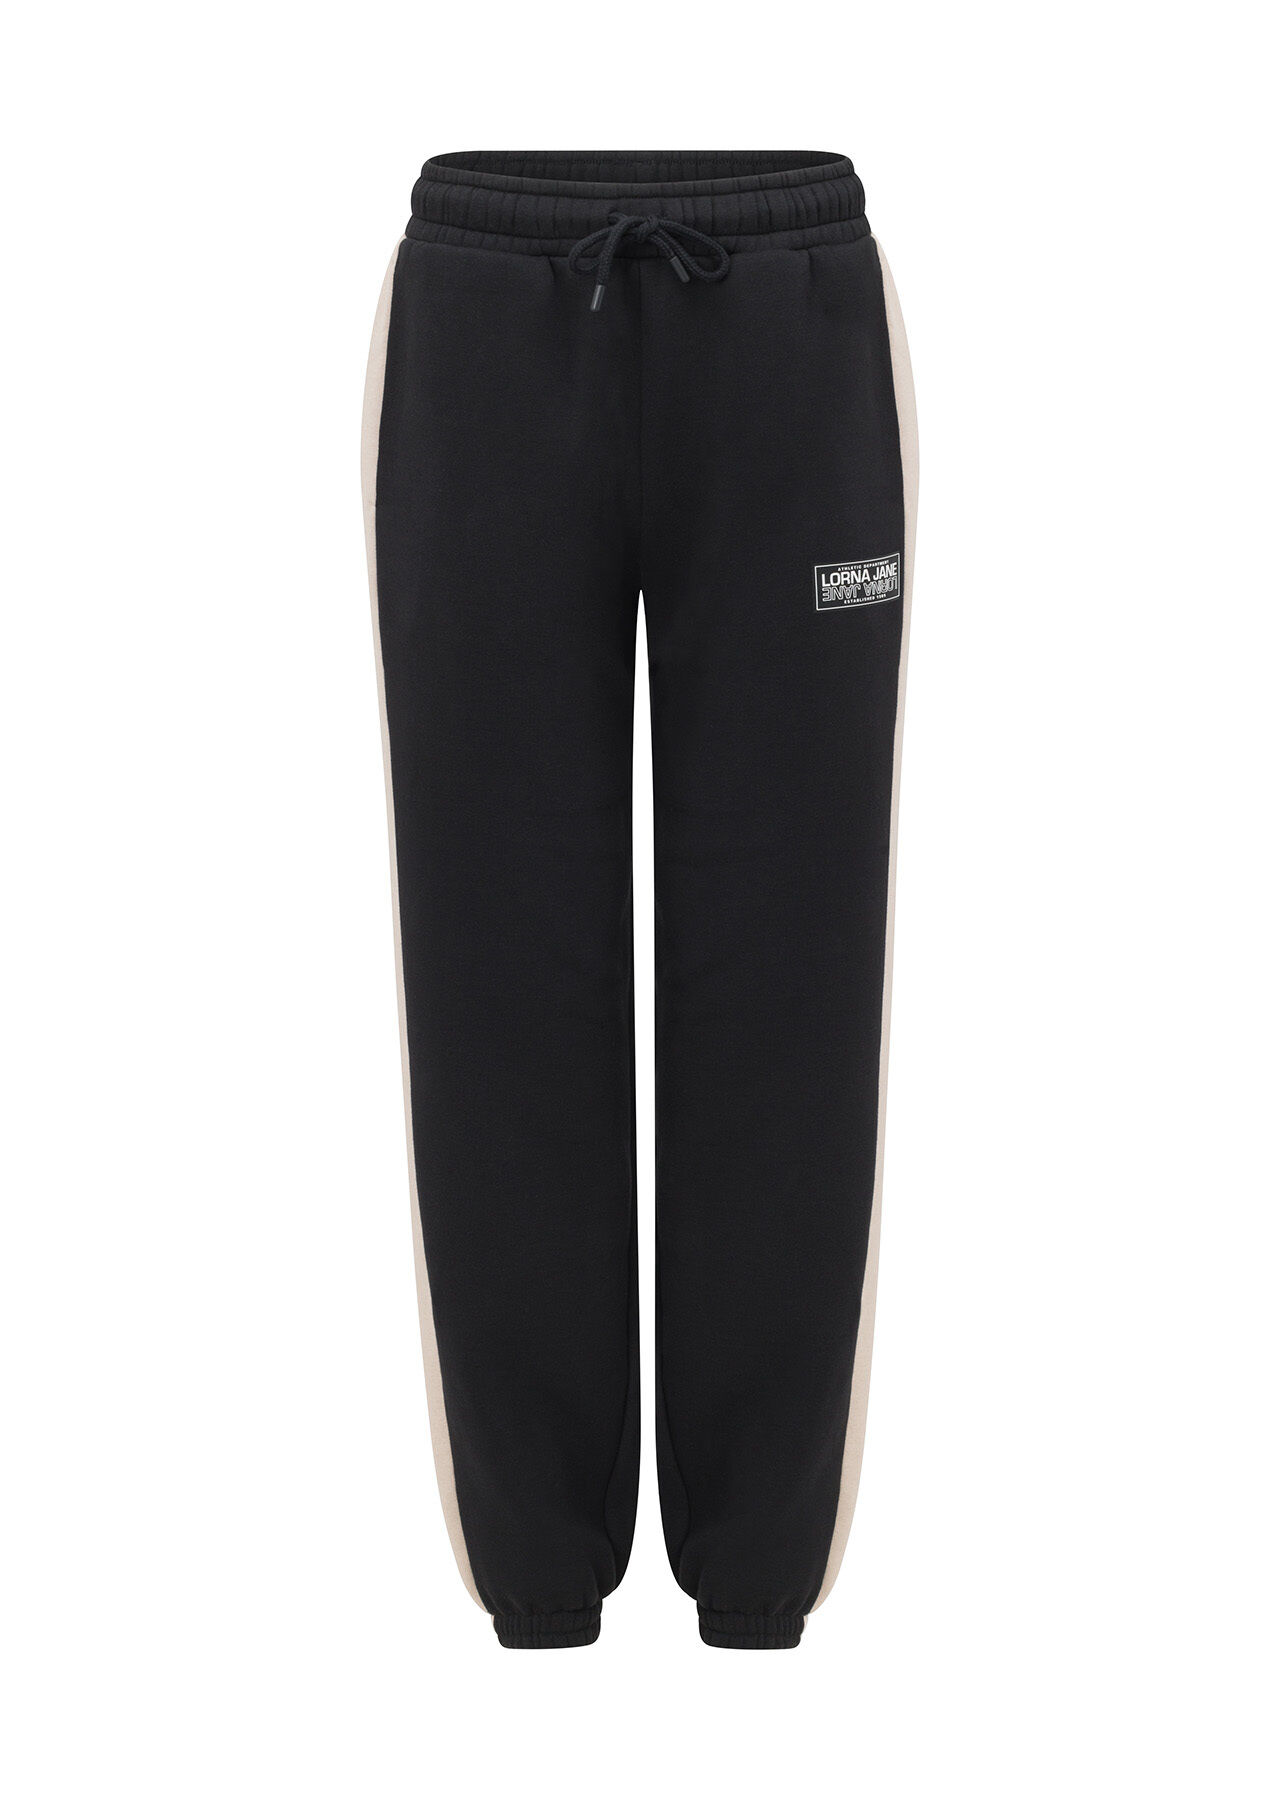 Unisex White Striped Black Joggers Pants | Konga Online Shopping